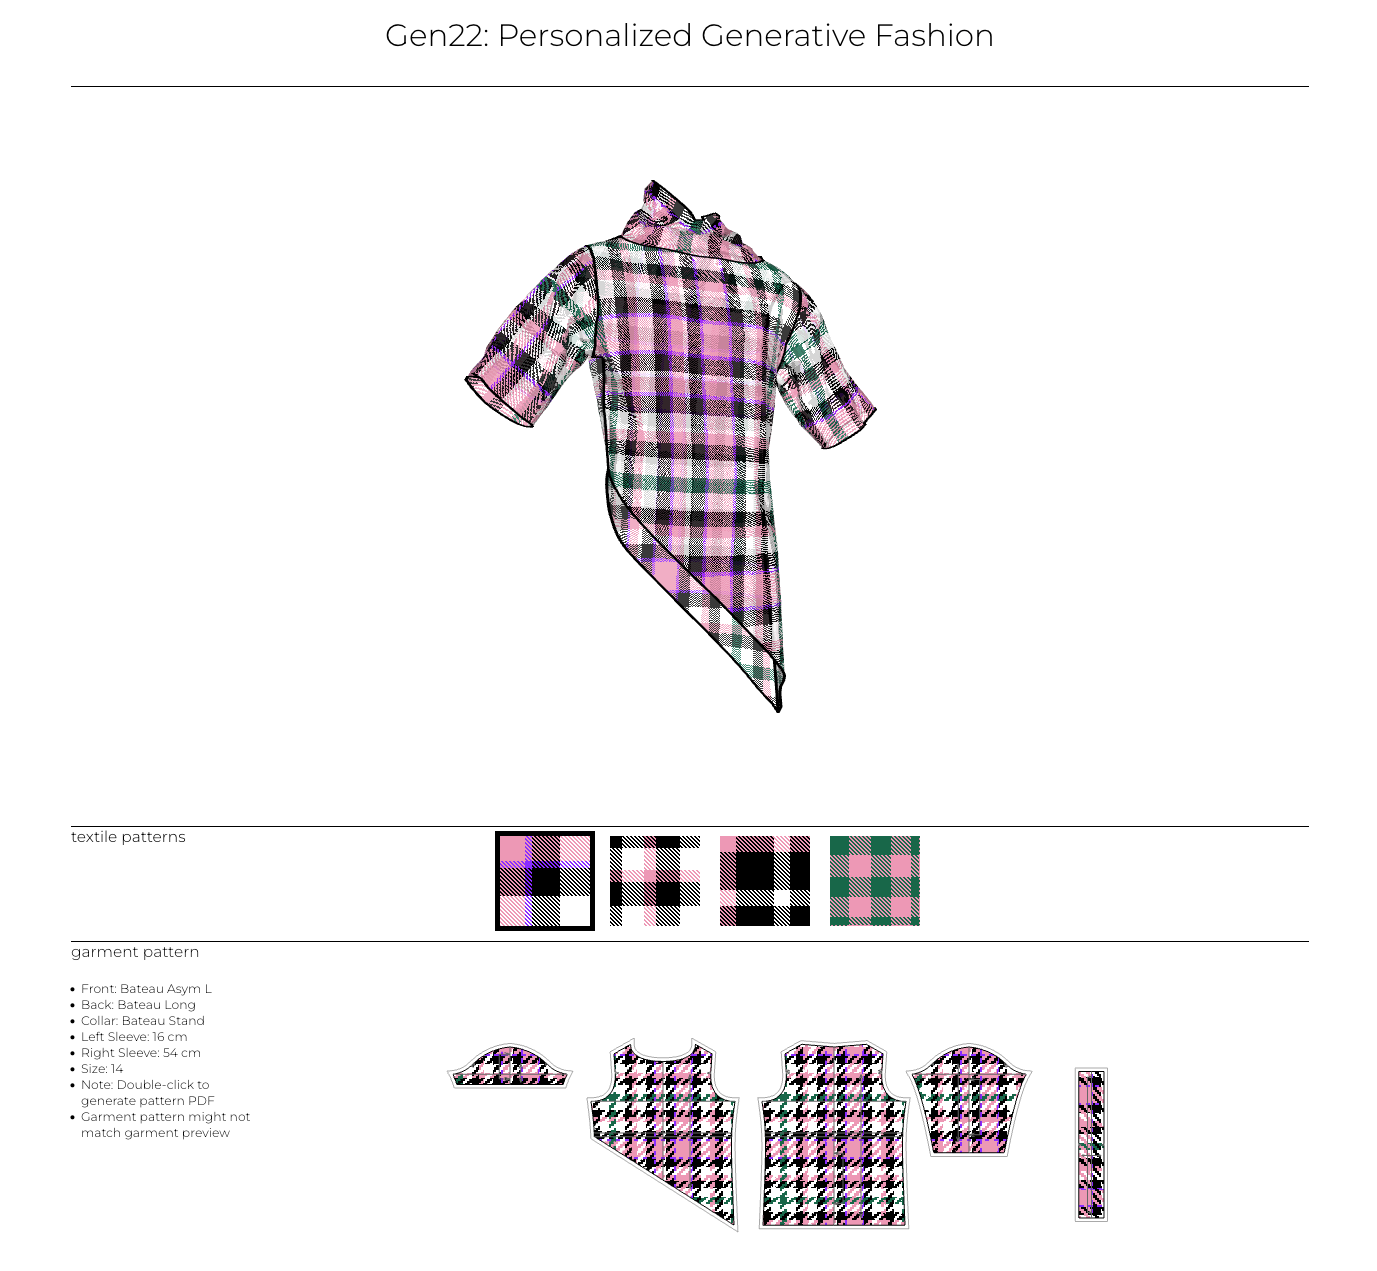 Gen22: Personalized Generative Fashion by Luis Fraguada